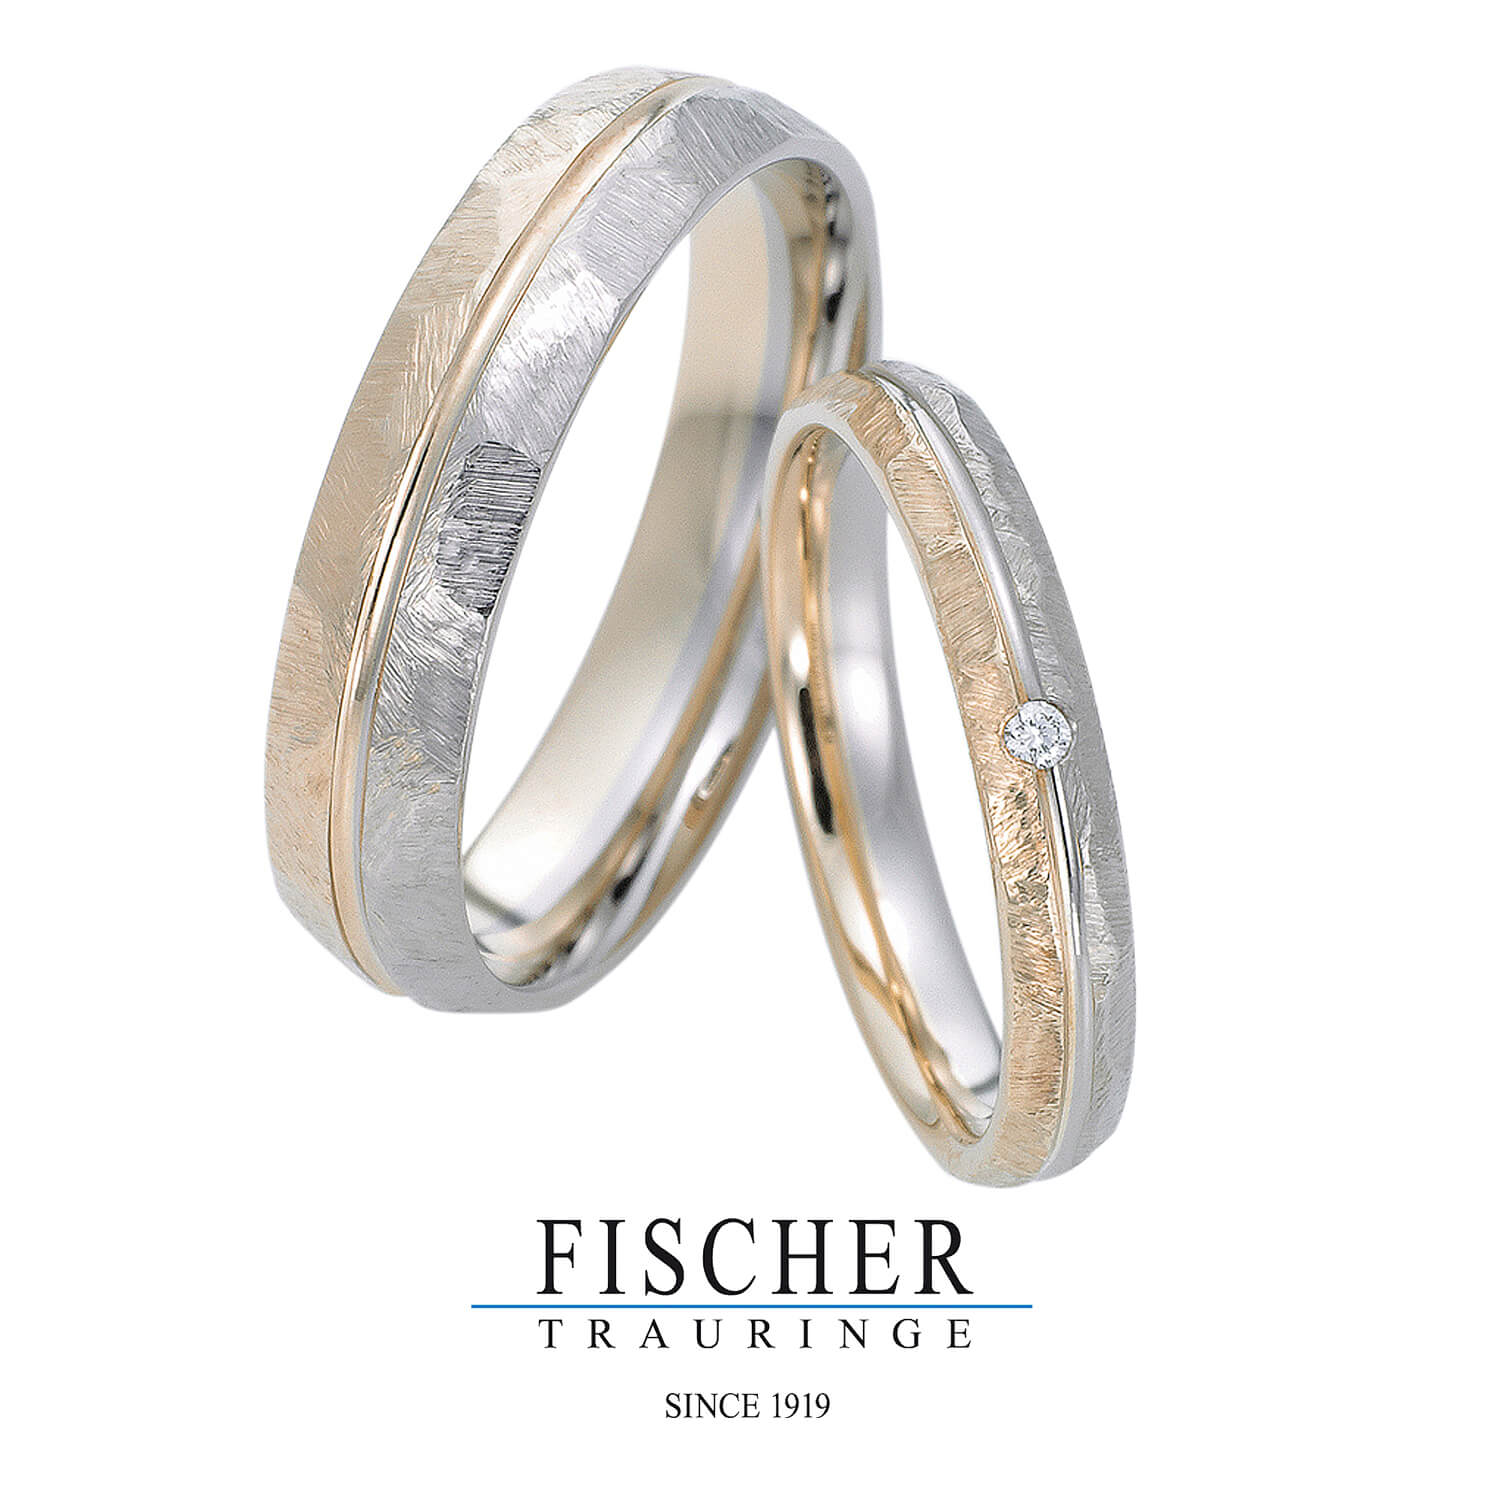 FISCHERフィッシャーの結婚指輪でWeddingRingウェディングリング9750370-025と9650370-030